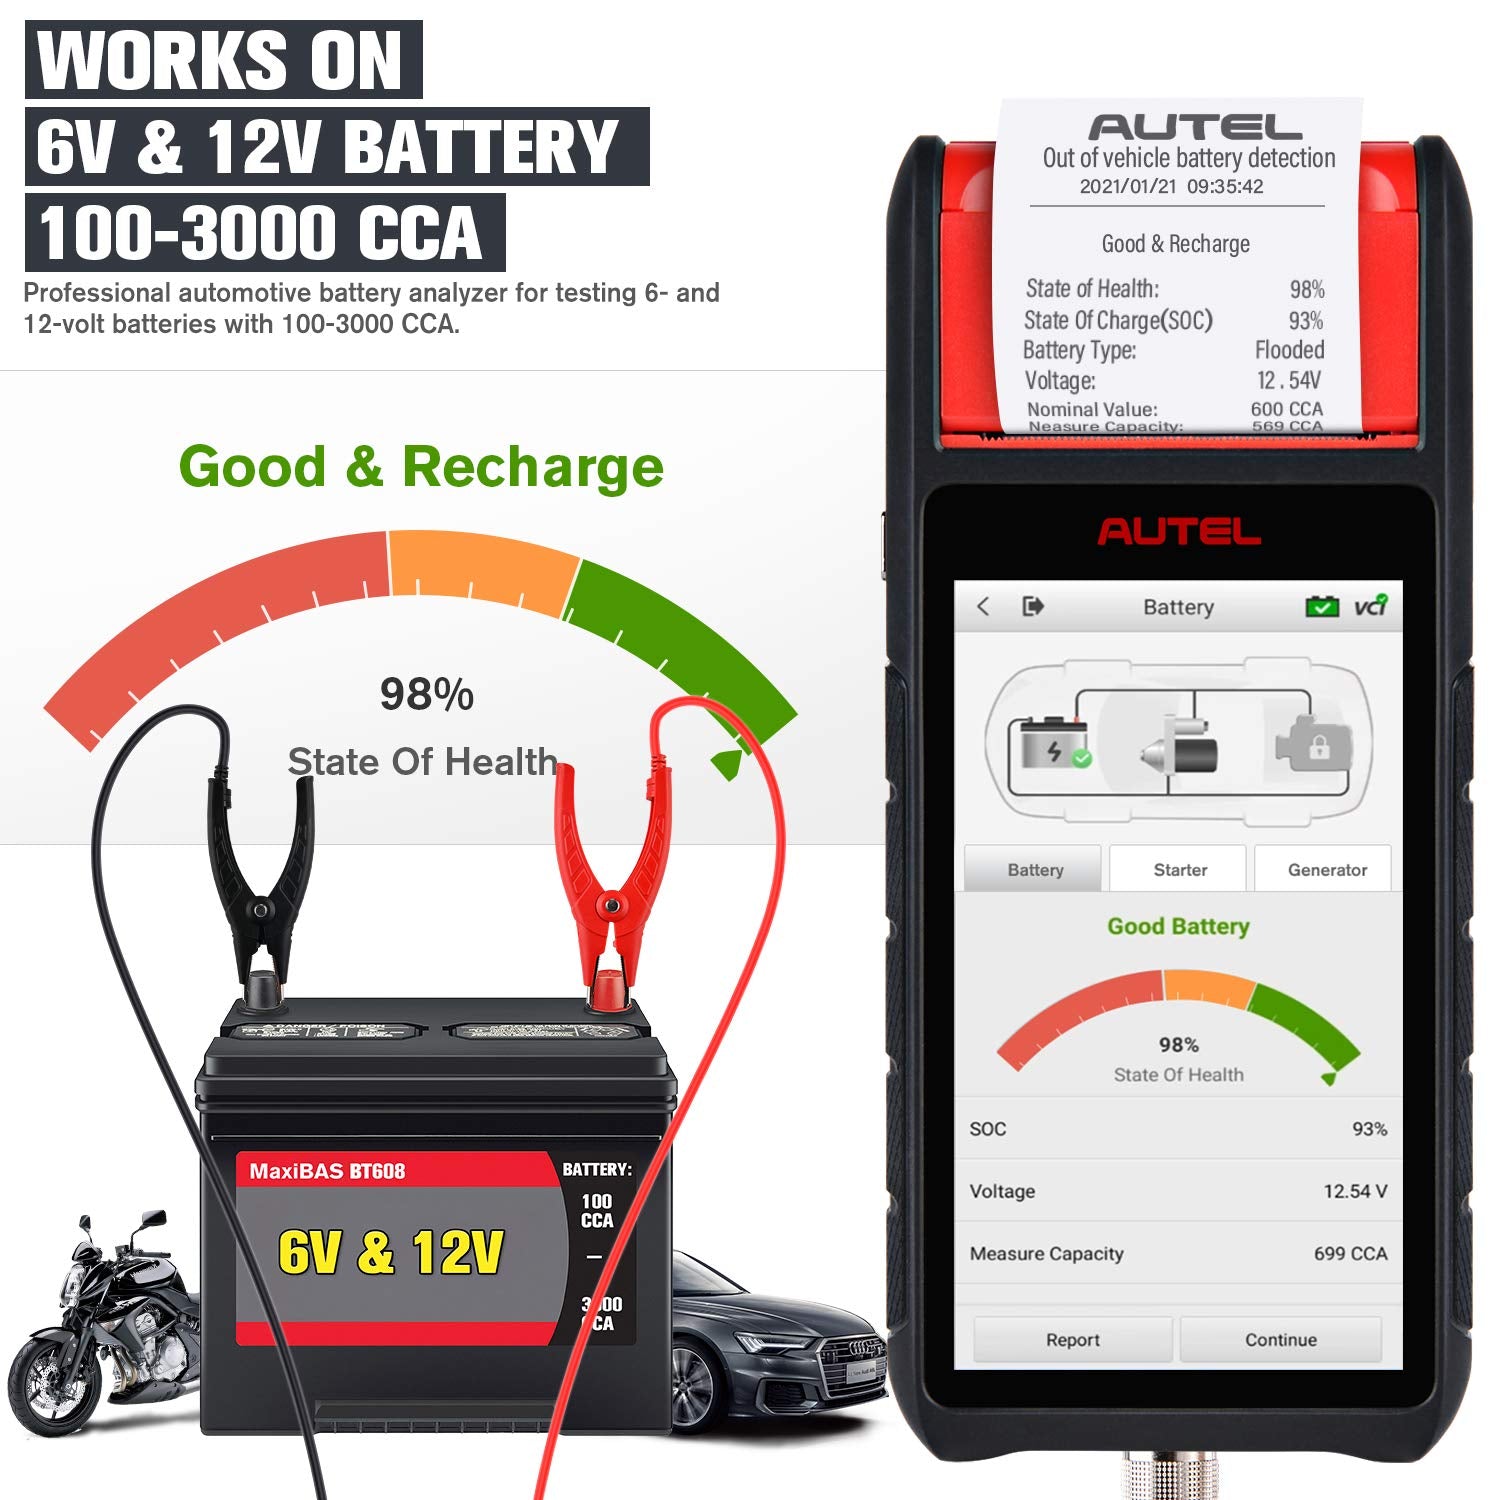 Autel MaxiBAS BT608 work on 6V & 12V battery 100-300cca